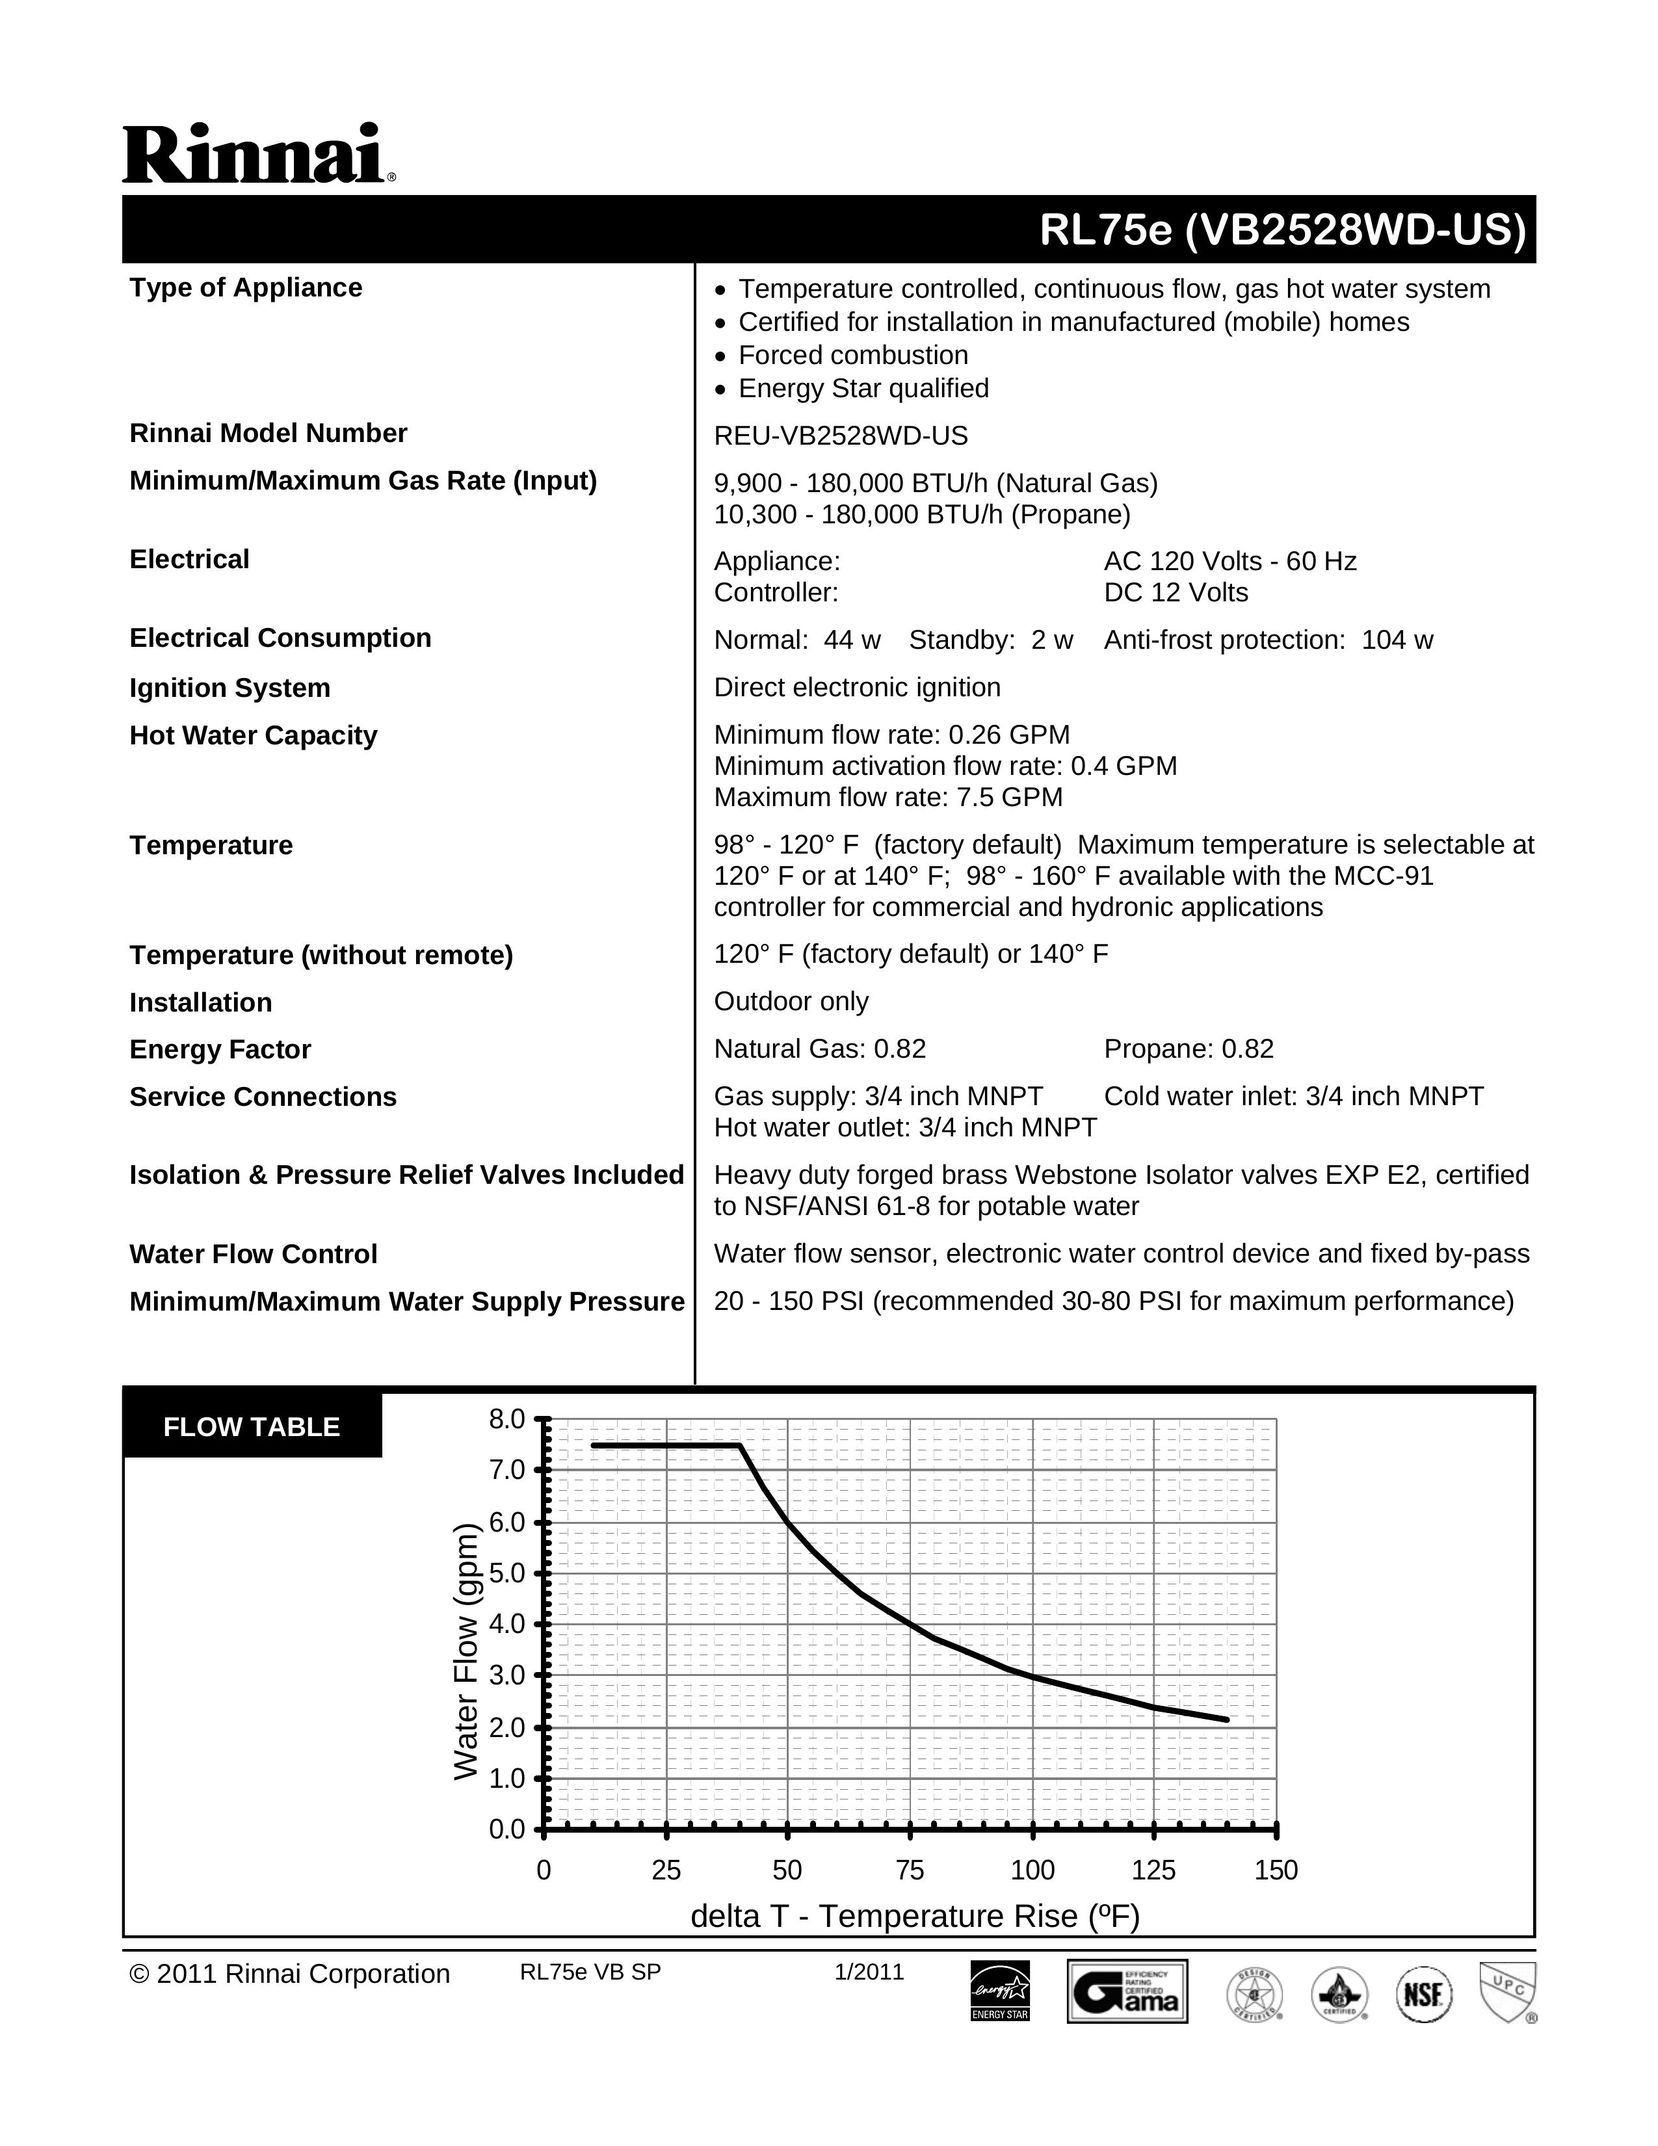 Rinnai REU-VB2528WD-US Water Heater User Manual